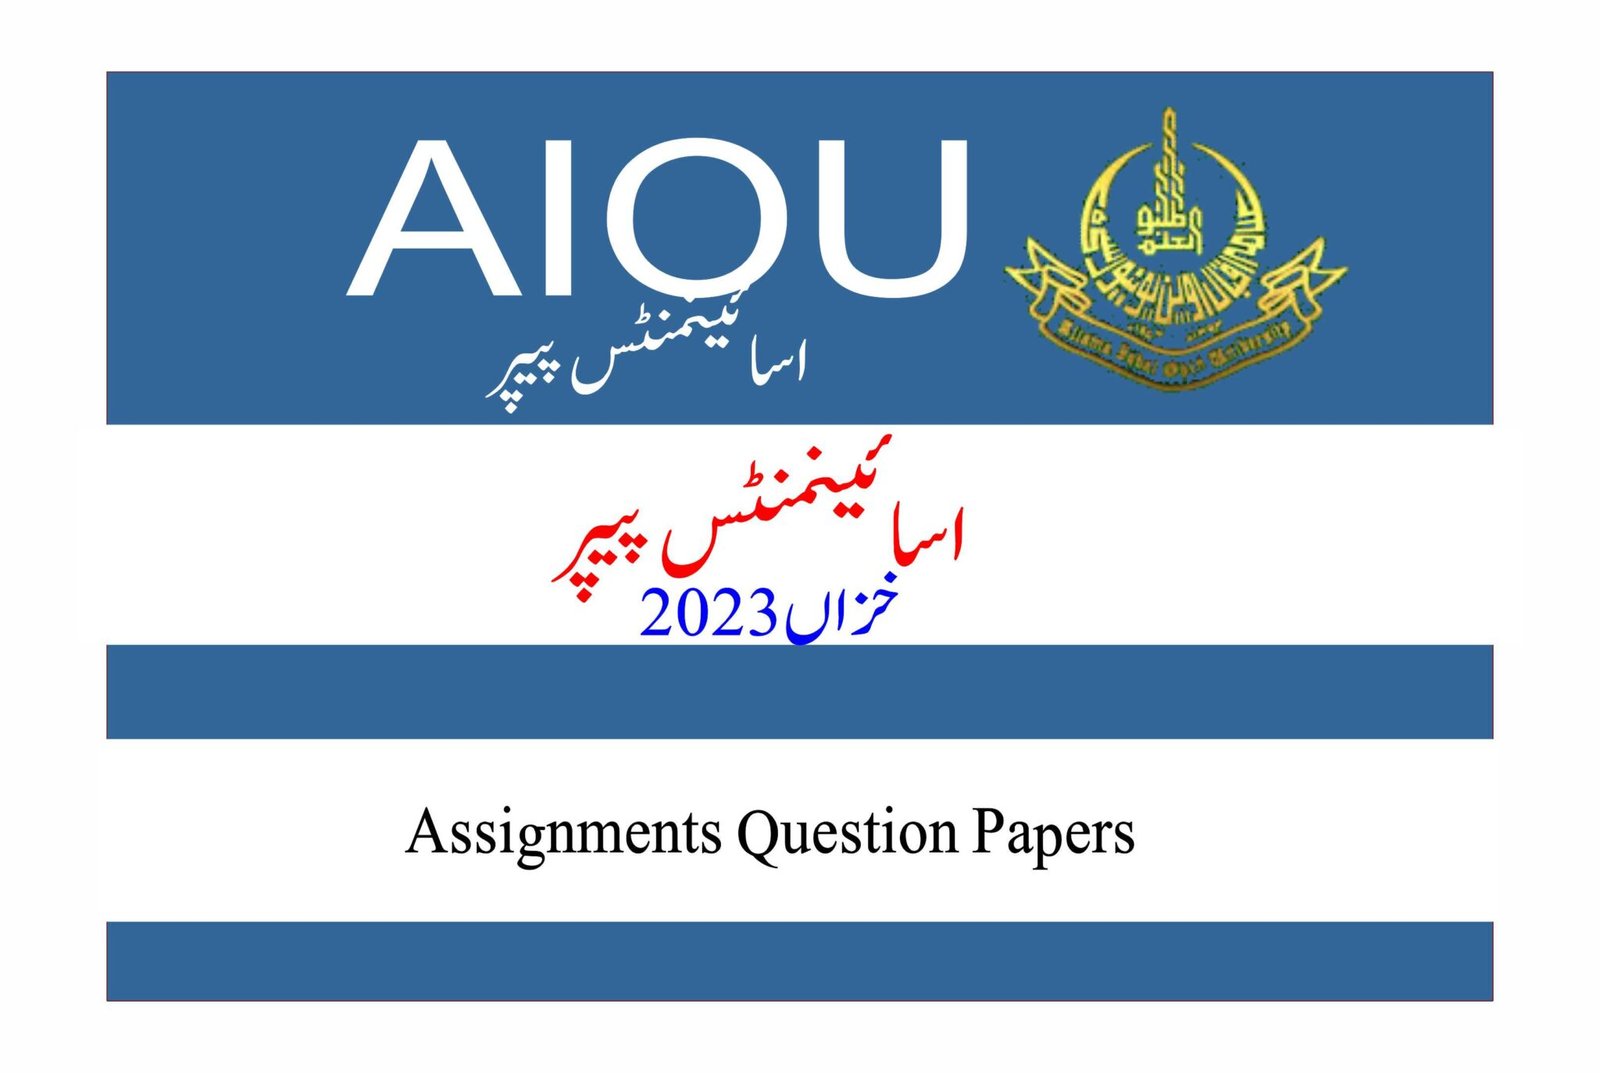 aiou assignment paper 2023